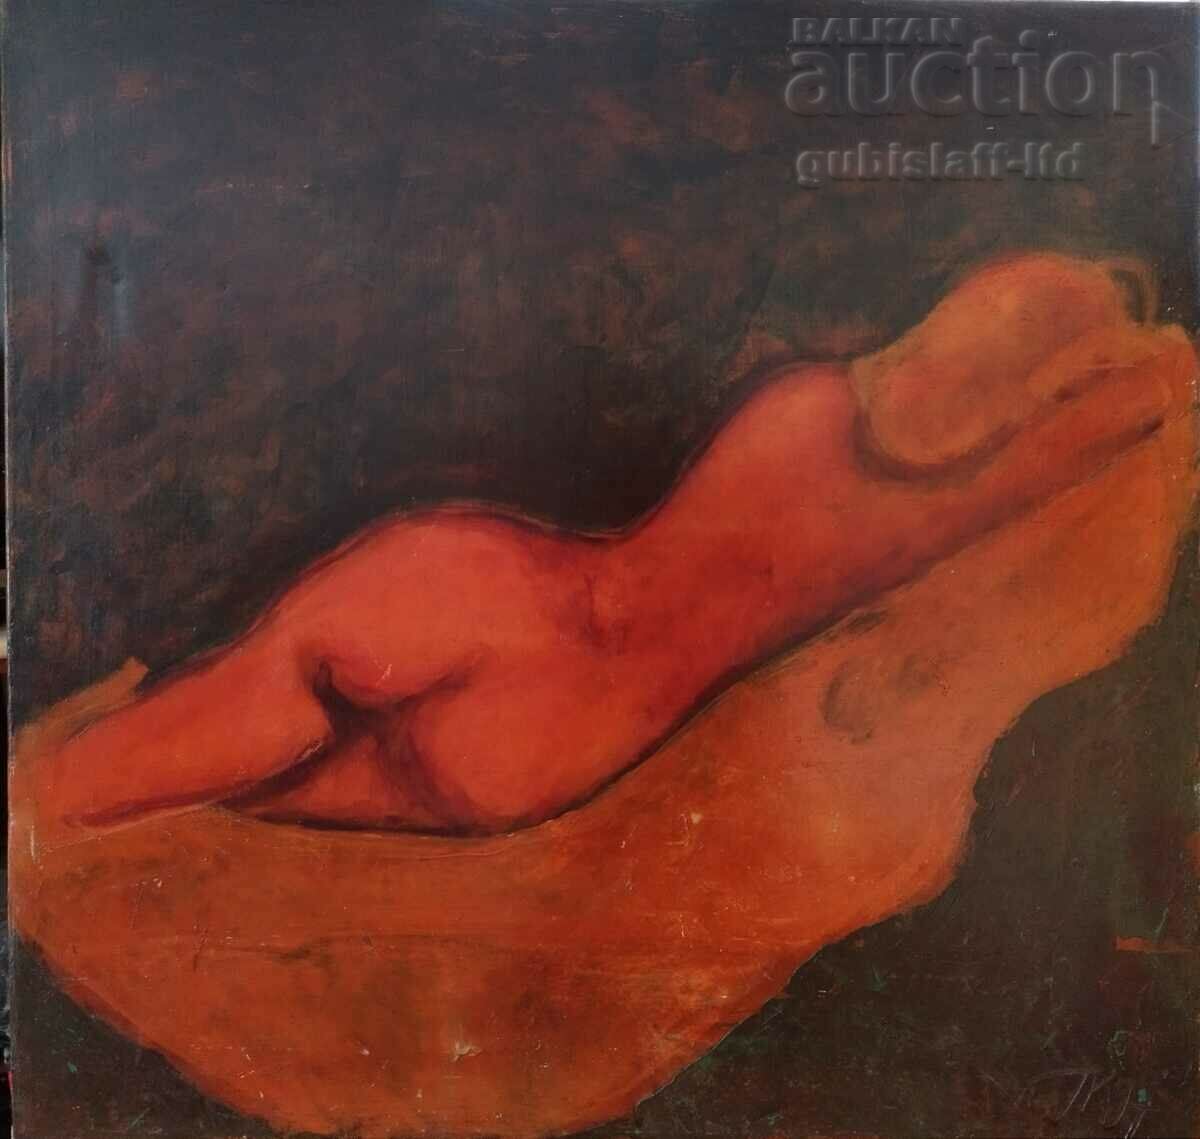 Painting, nude, erotica, 1997